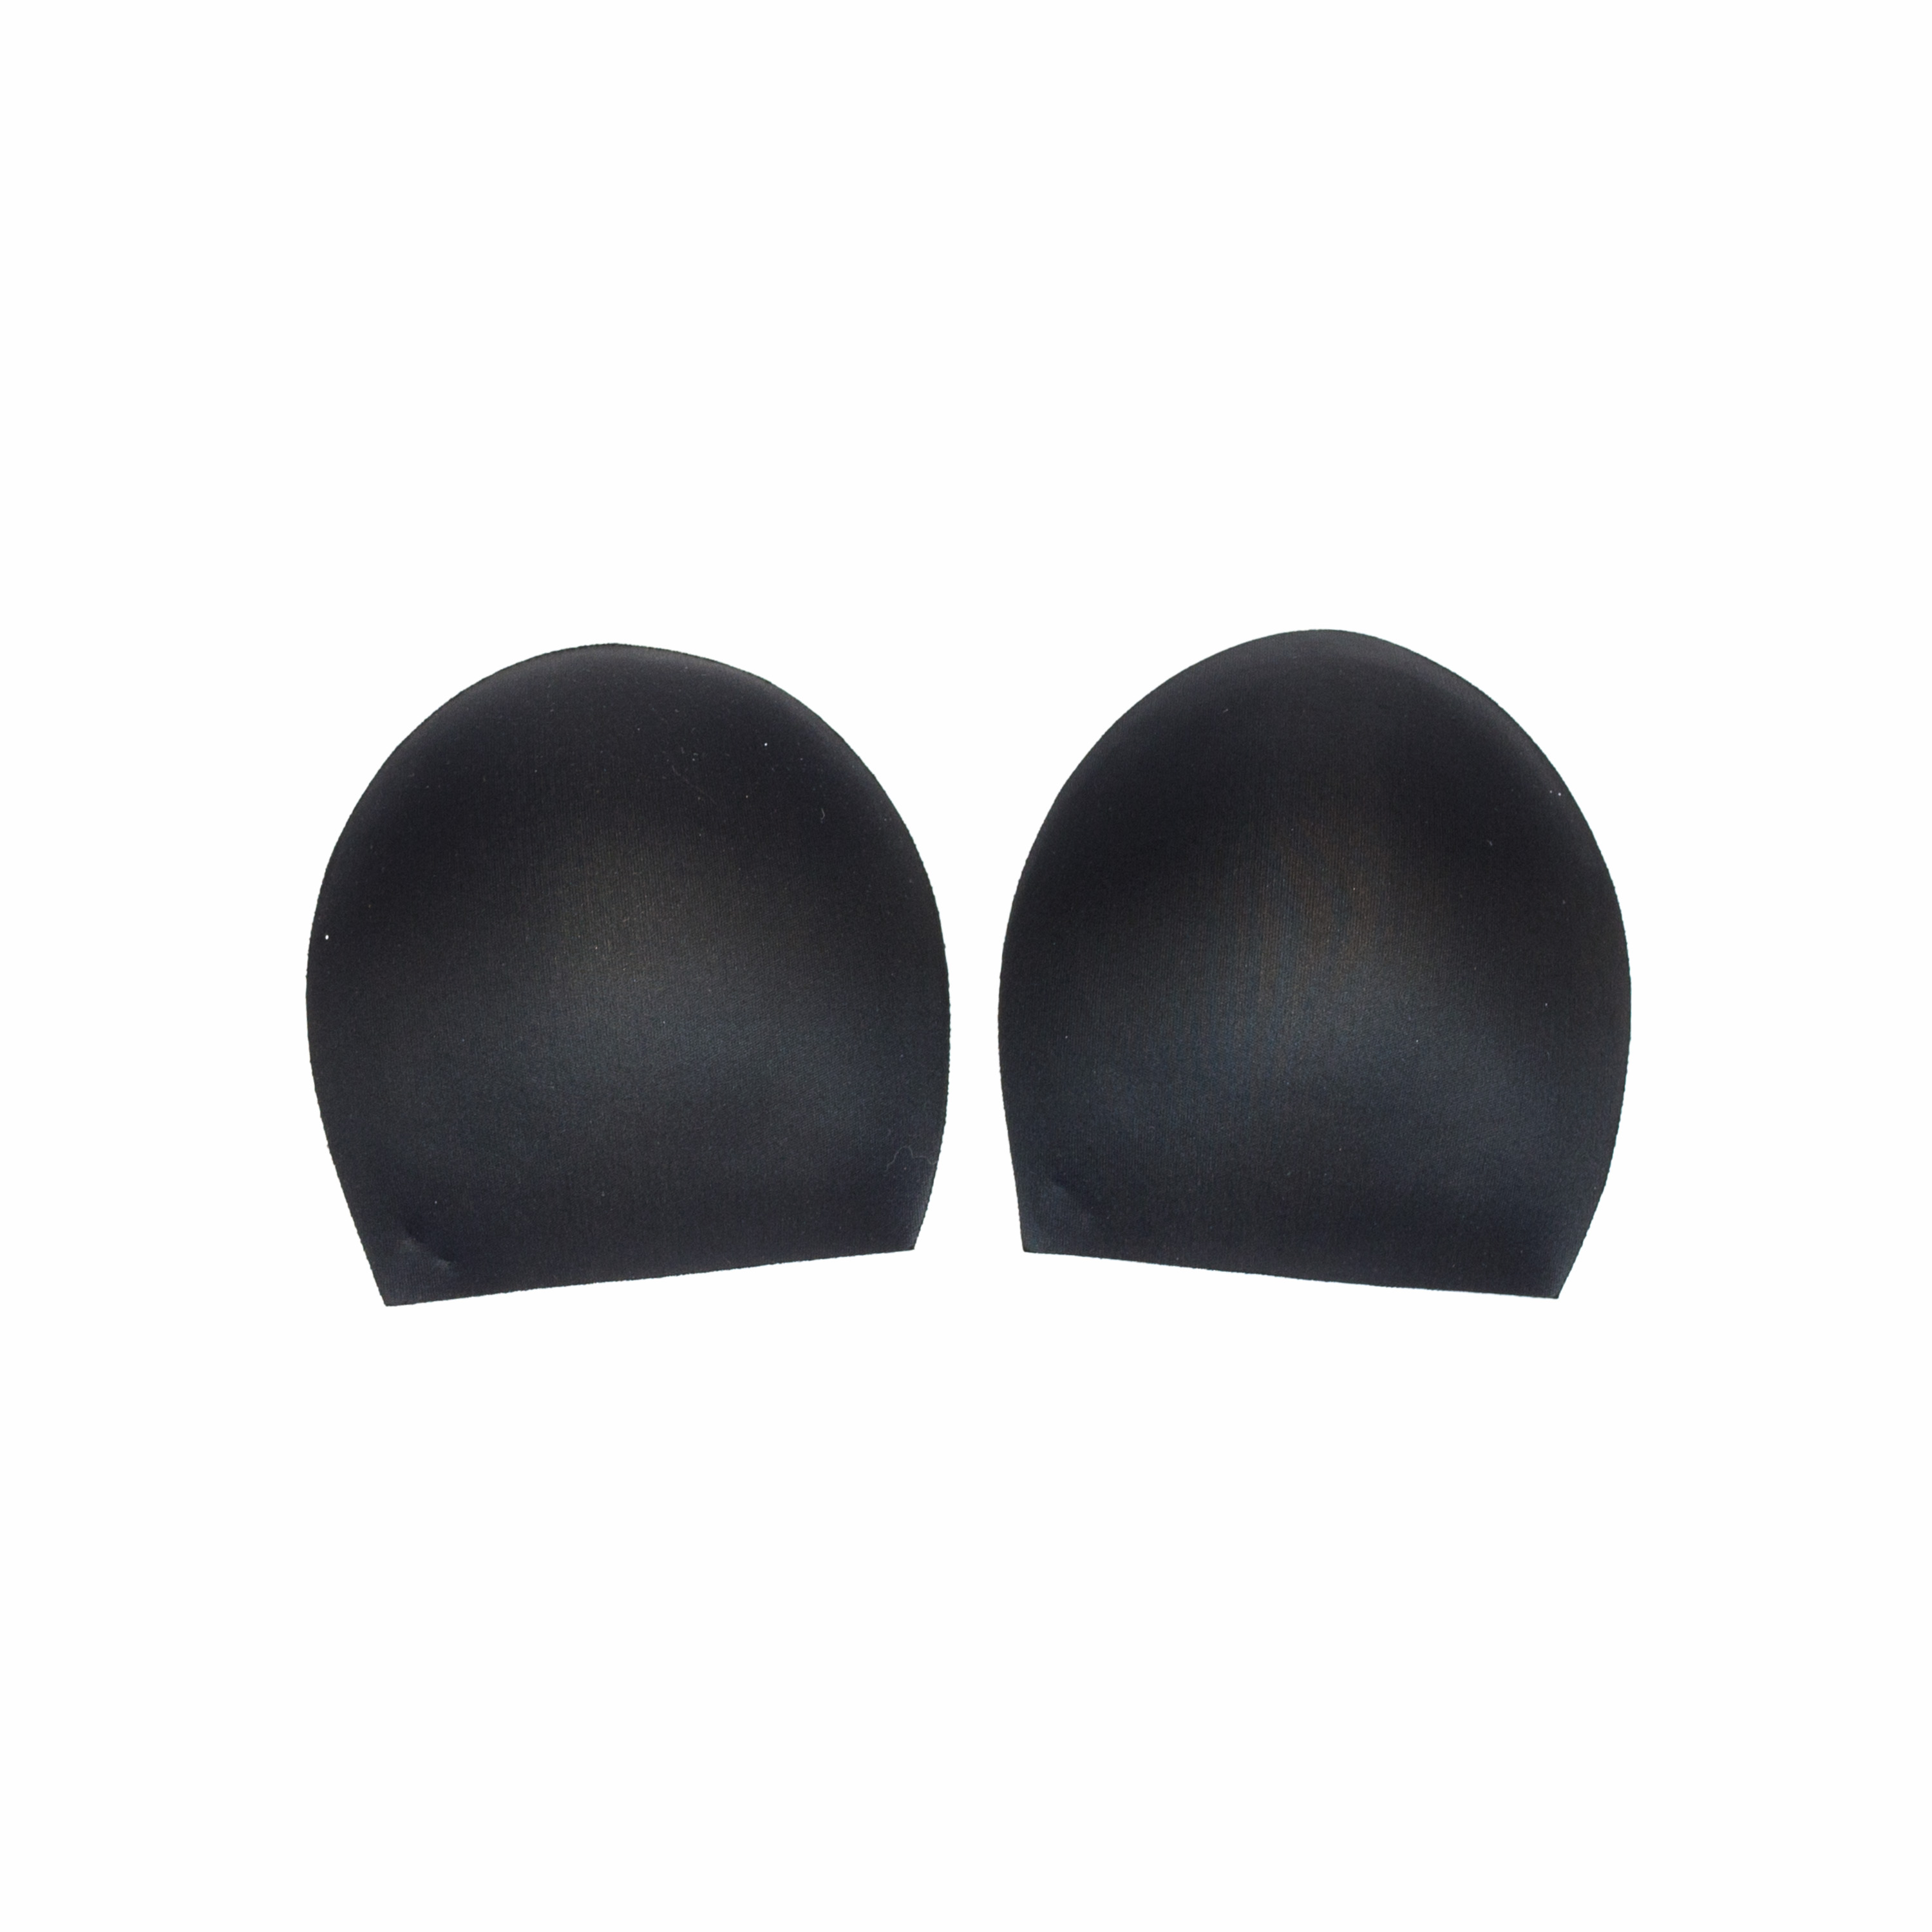 foam swimwear cups size 22 MQ-22 black from Bra-Makers Supply